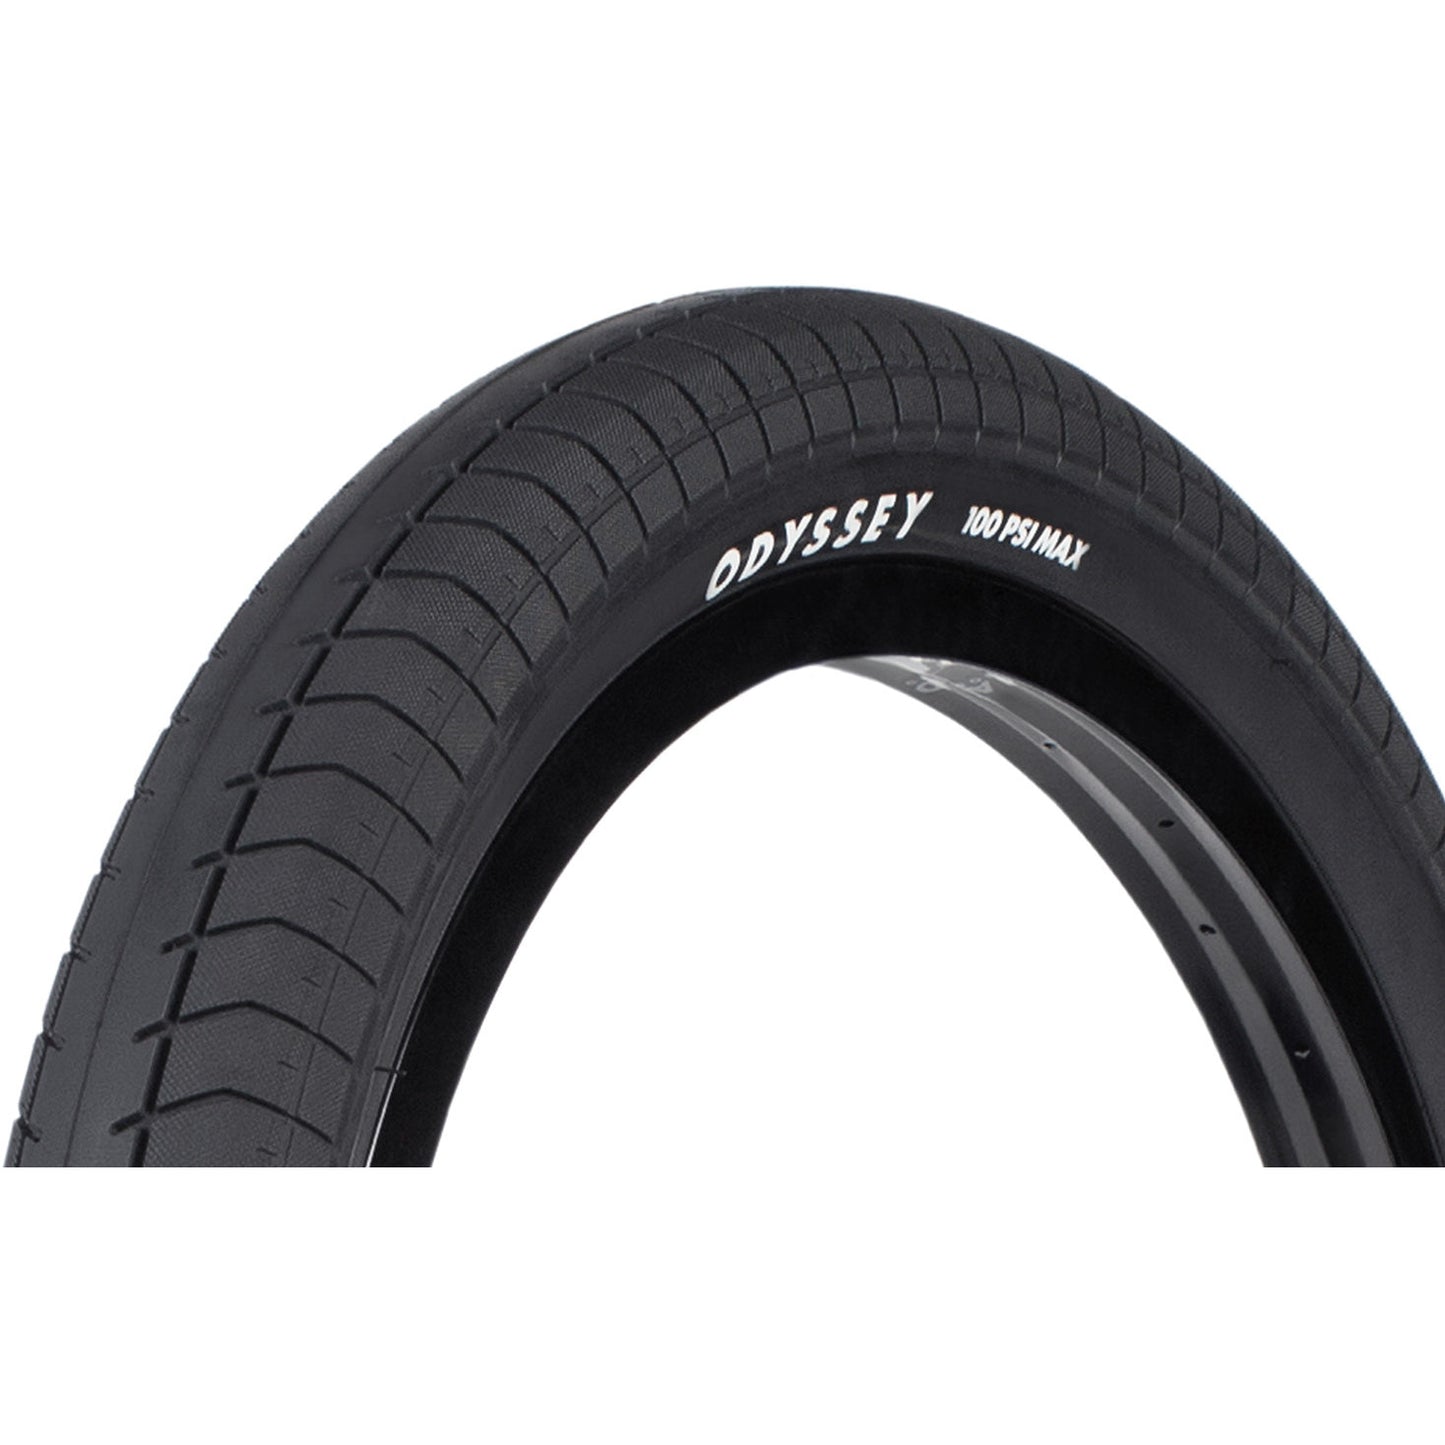 Odyssey Path Pro Tire